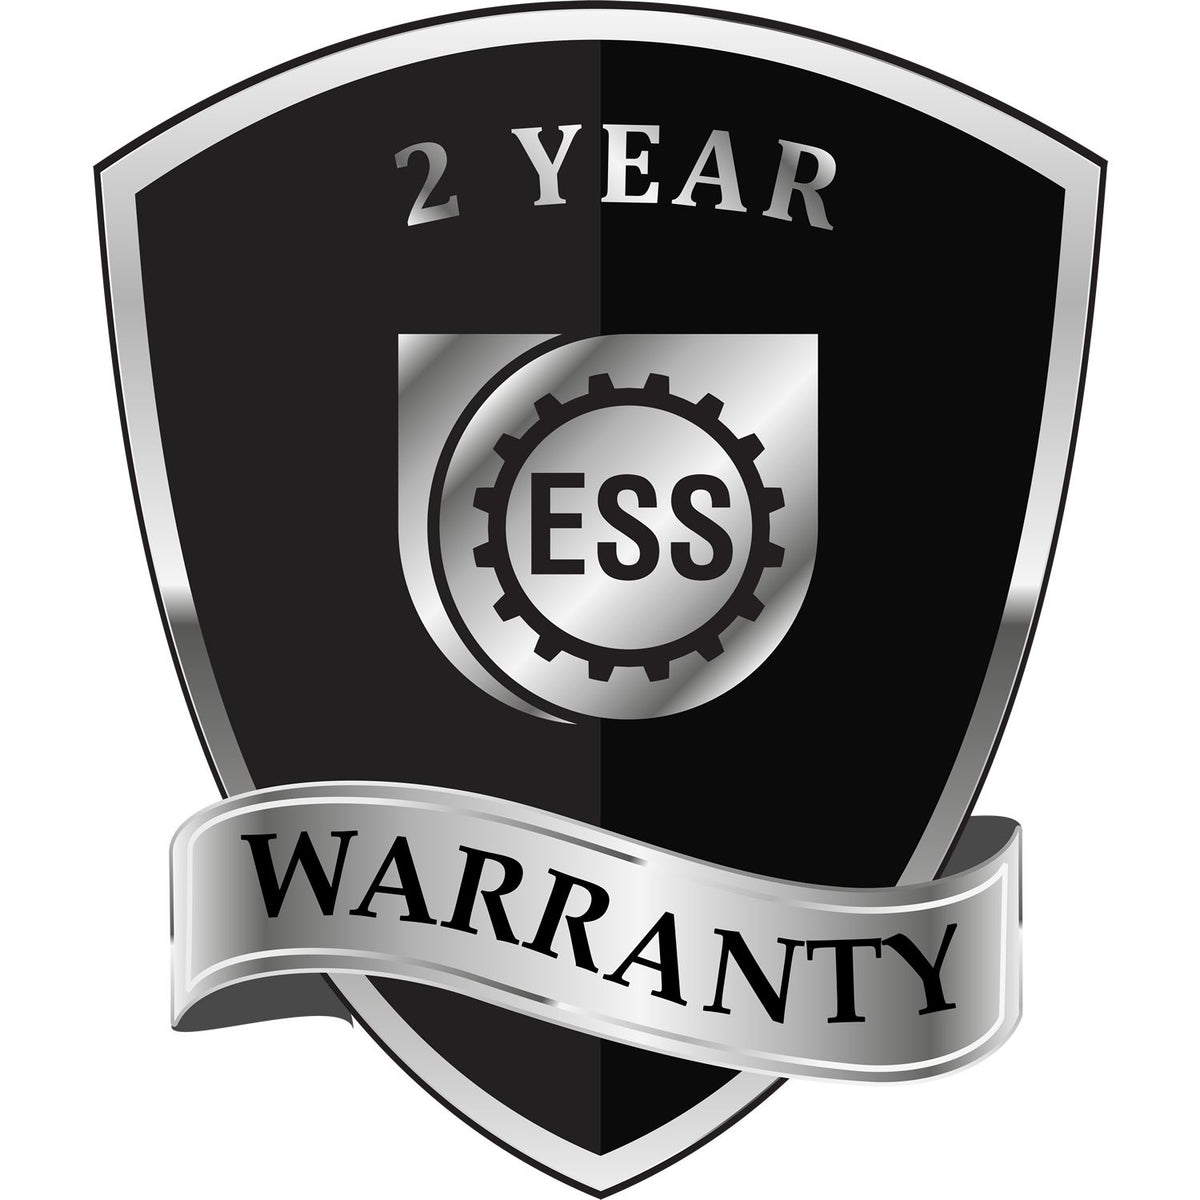 A black and silver badge or emblem showing warranty information for the North Carolina Geologist Desk Seal